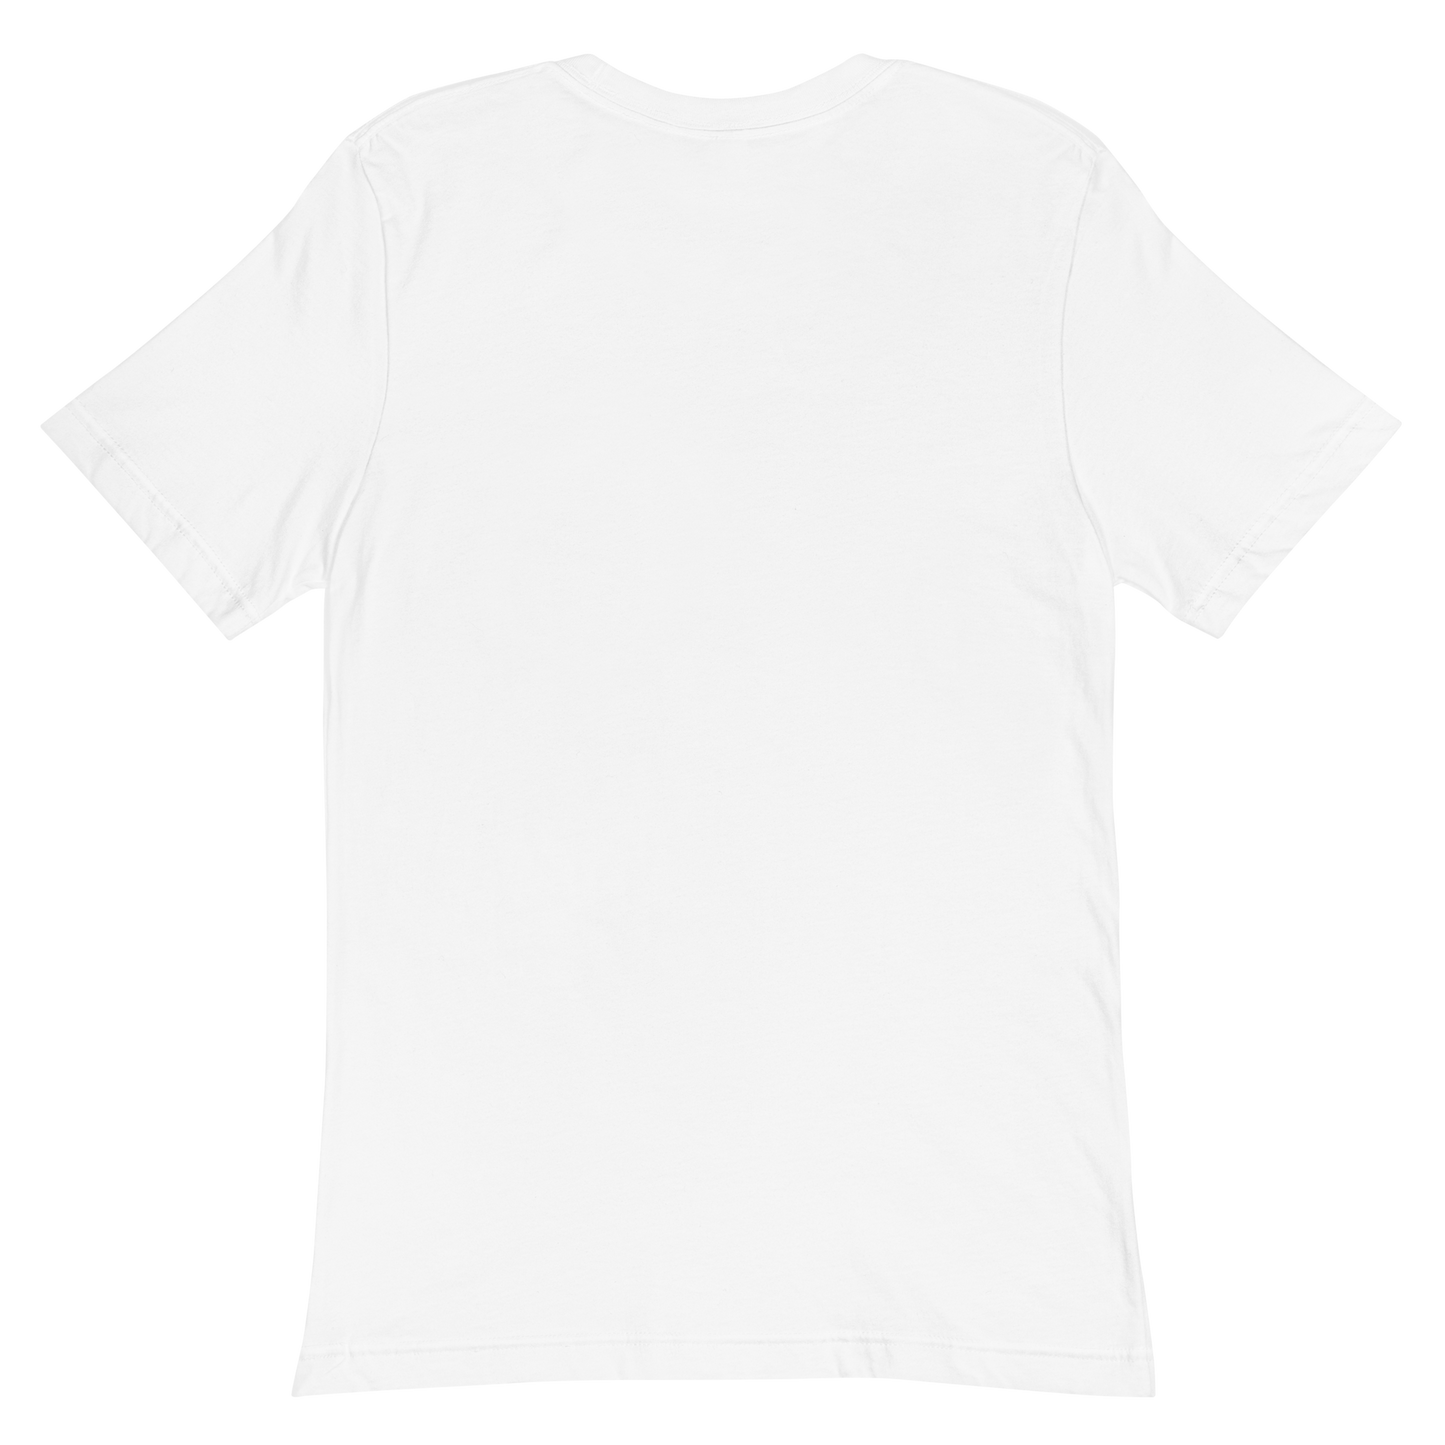 Banana Unisex Pocket T-Shirt